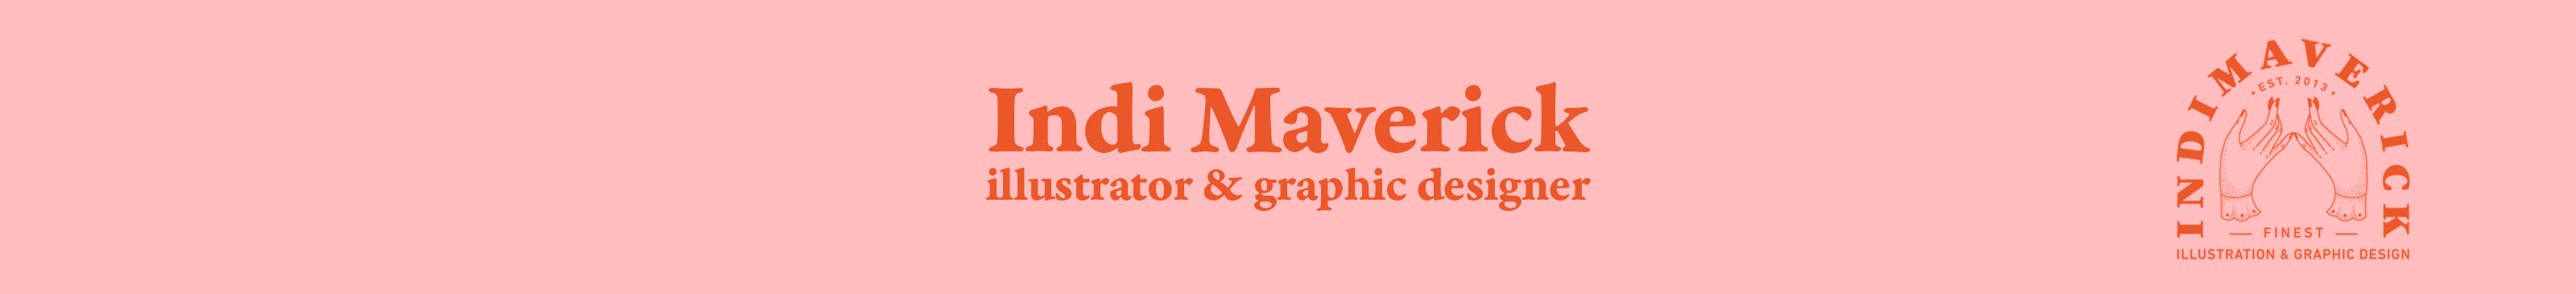 Indi Maverick's profile banner